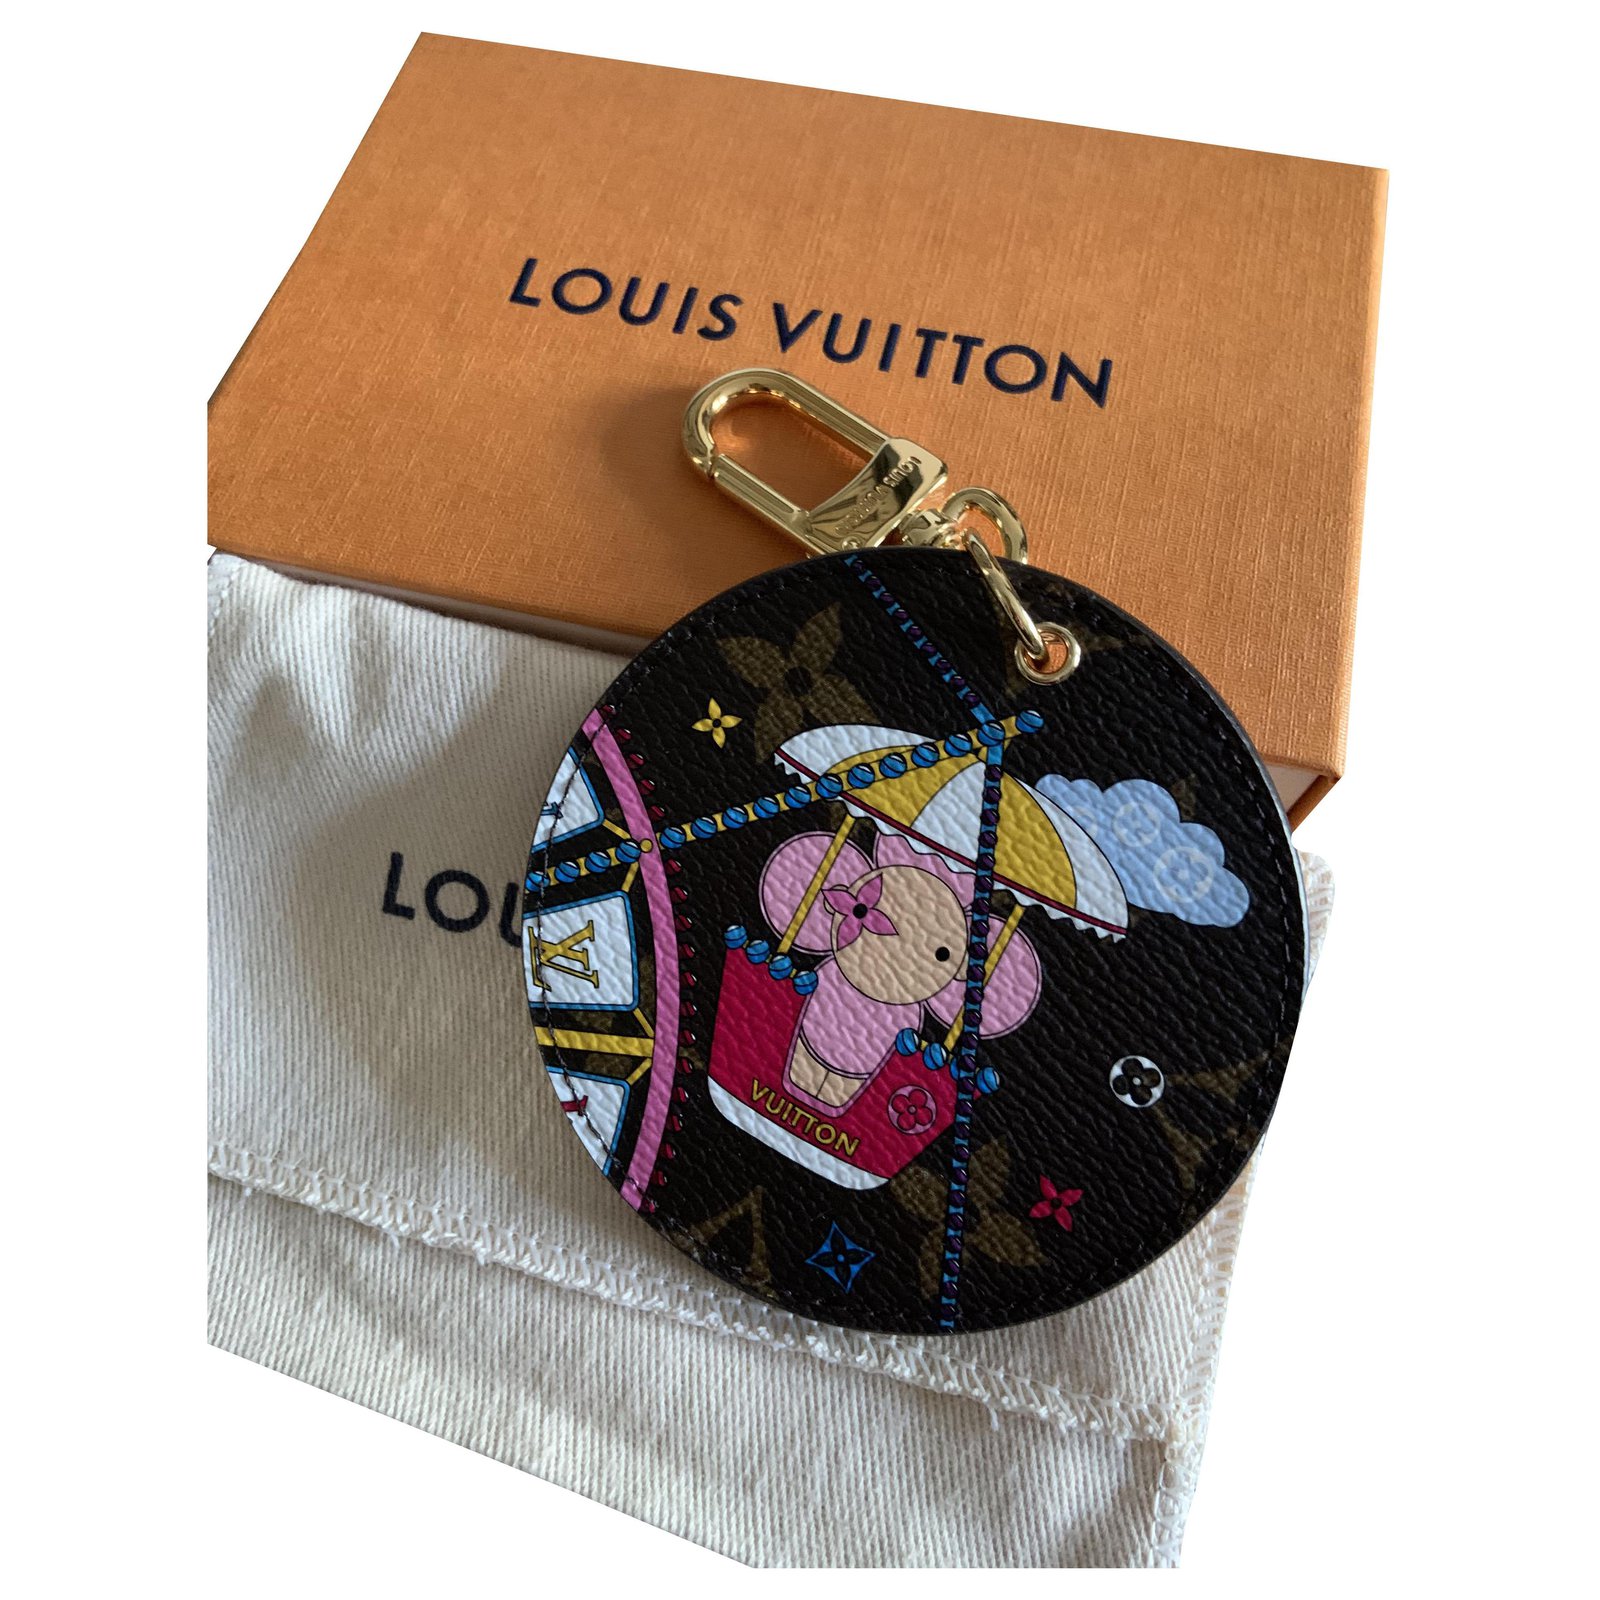 Vivienne Louis Vuitton Christmas illustrations limited edition